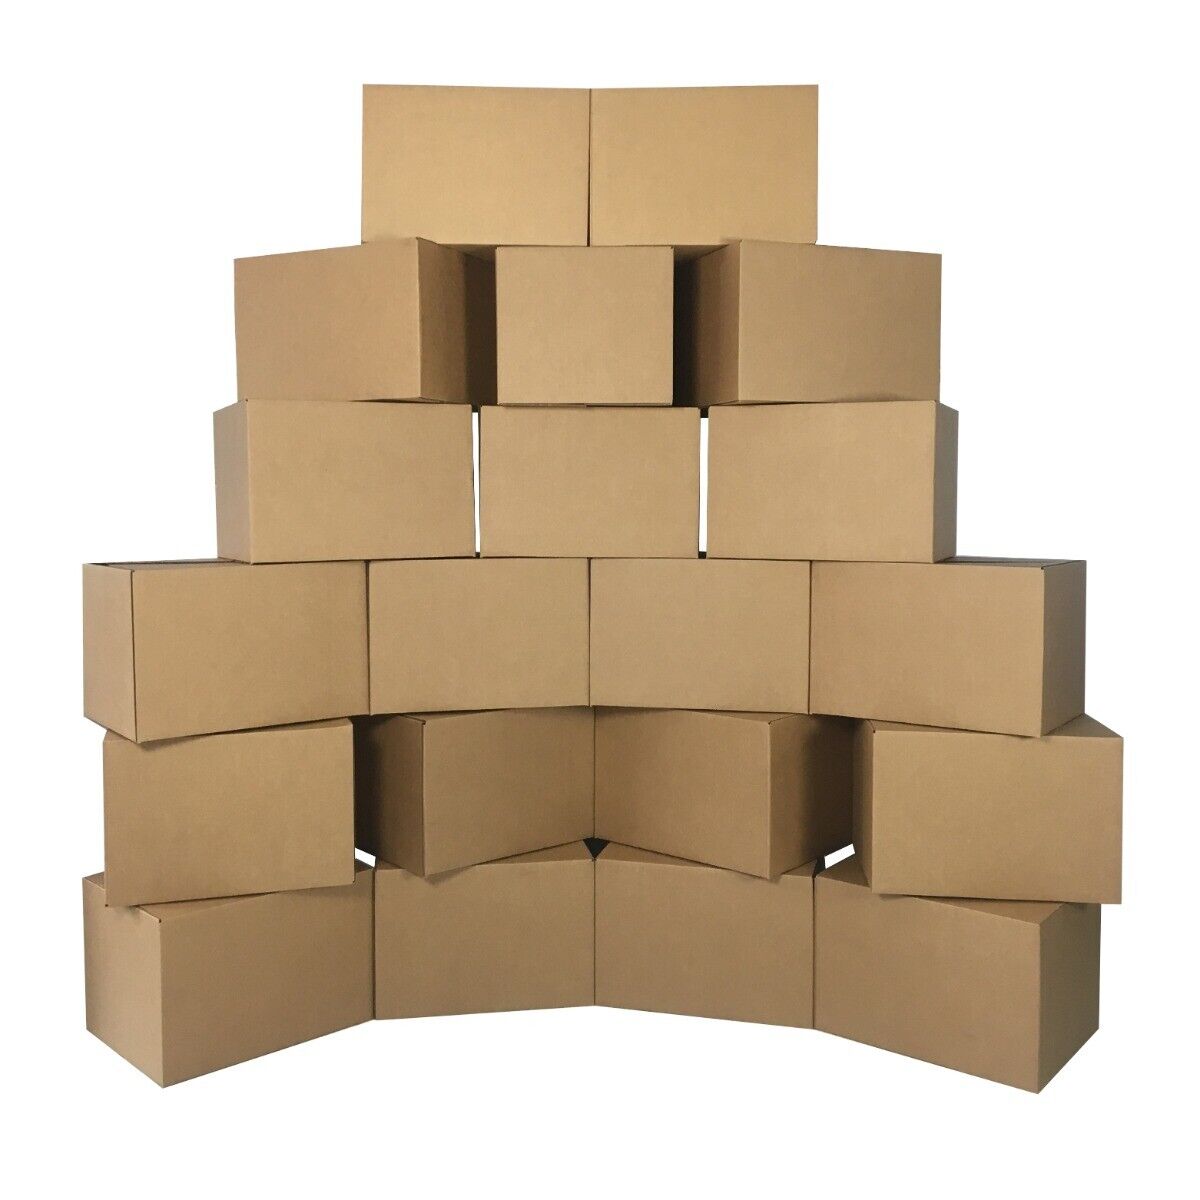 UBMOVE Medium Cardboard Moving Boxes (20 Pack) 18 x 14 x 12-Inch 